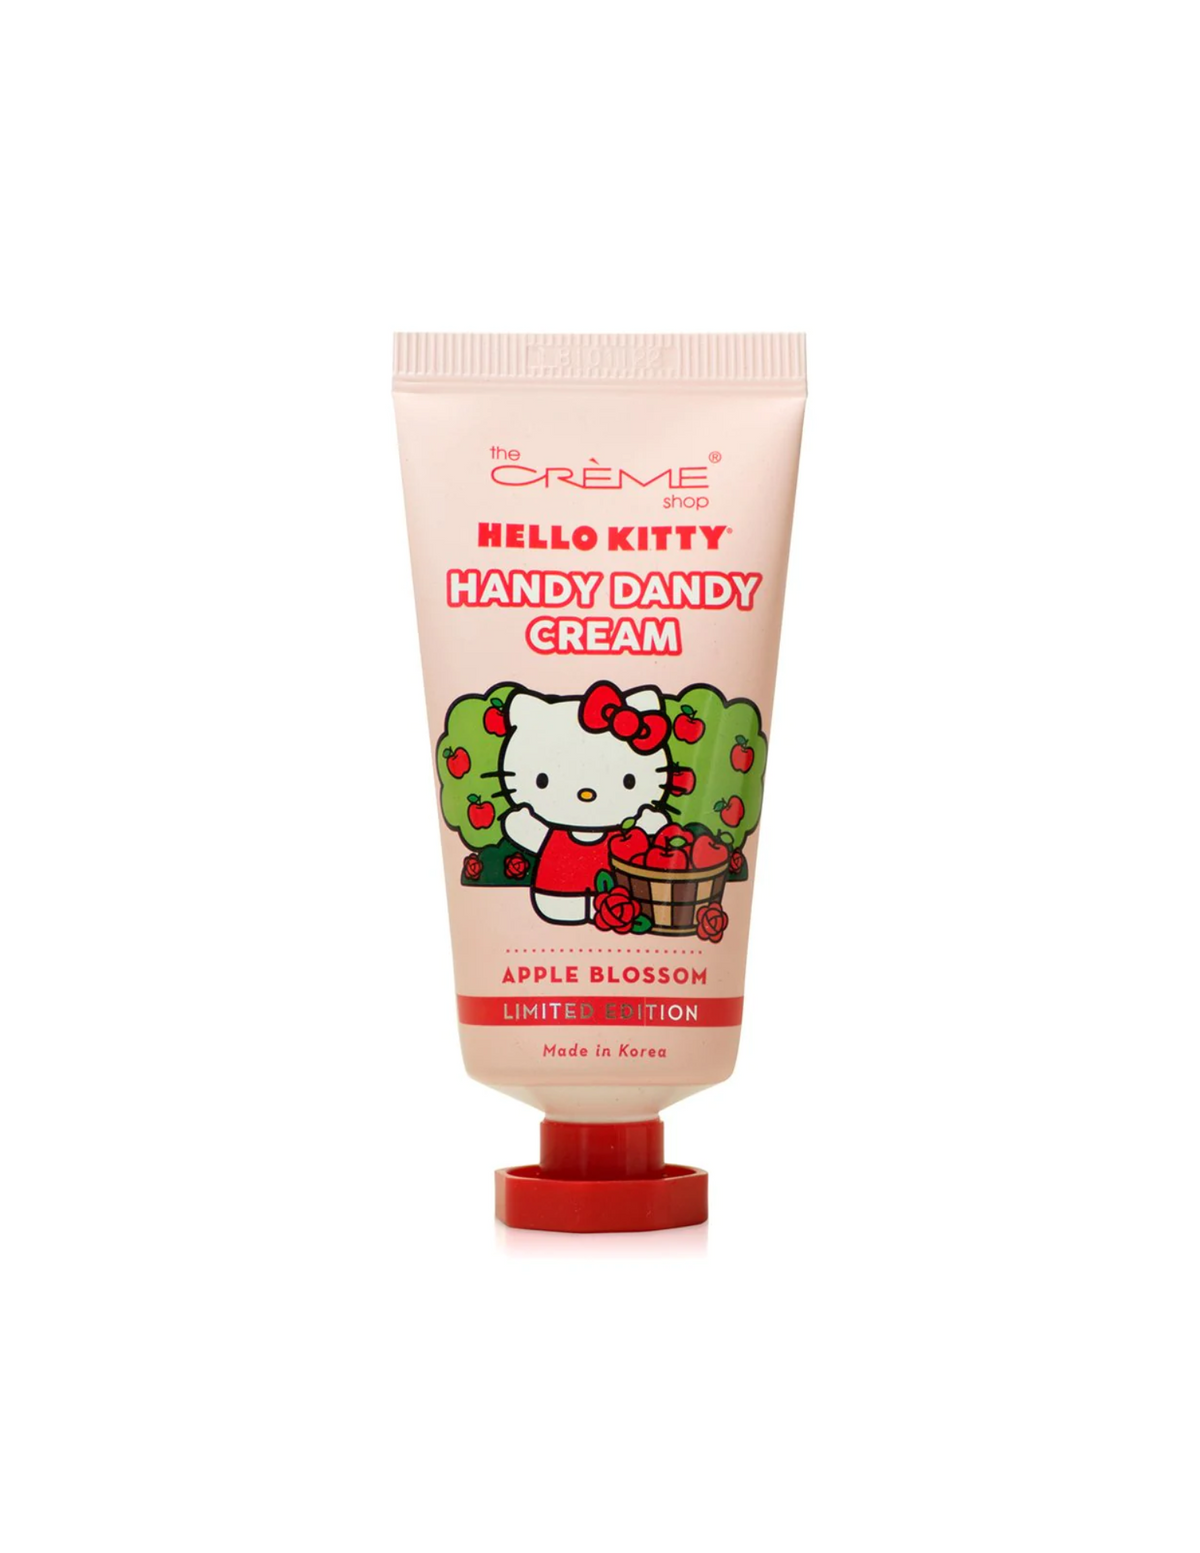 The Creme Shop x Hello Kitty Handy Dandy Cream | Apple Blossom